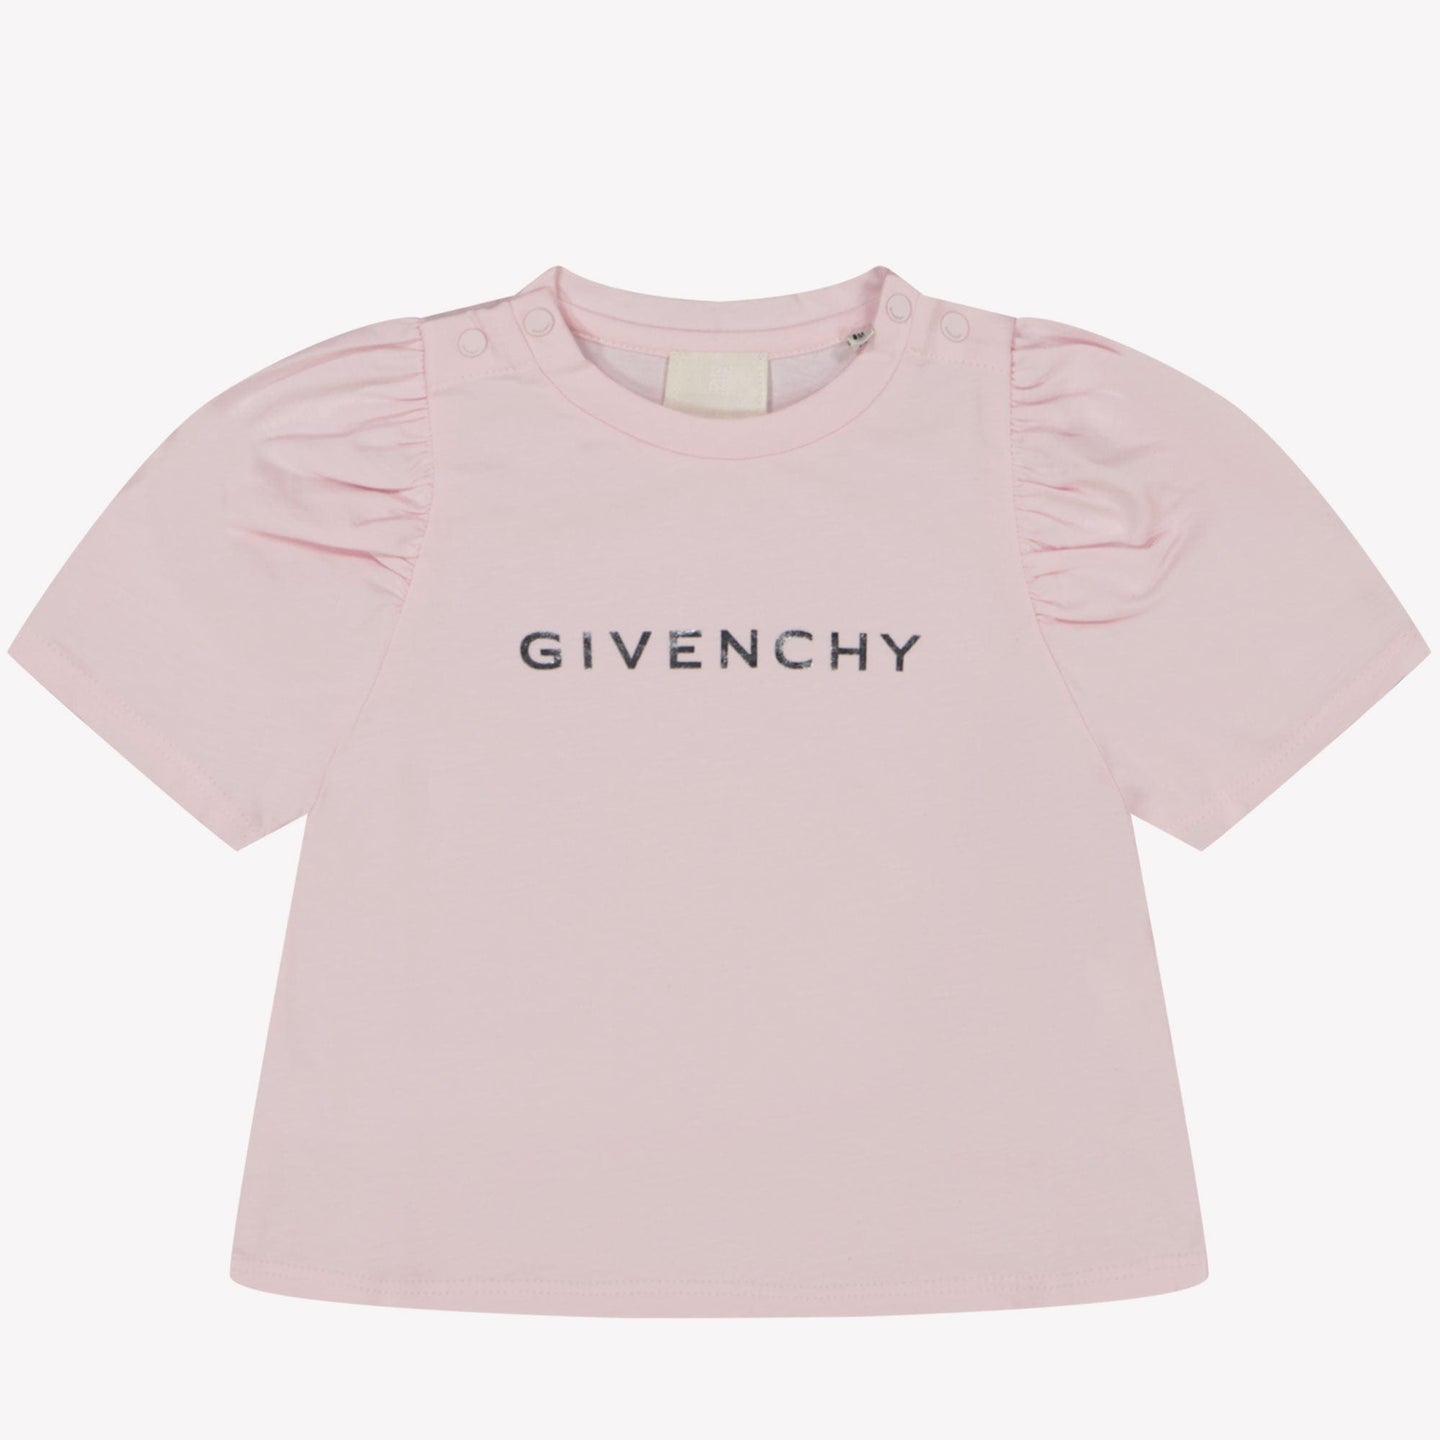 Givenchy Baby Meisjes T-shirt Licht Roze 6 mnd